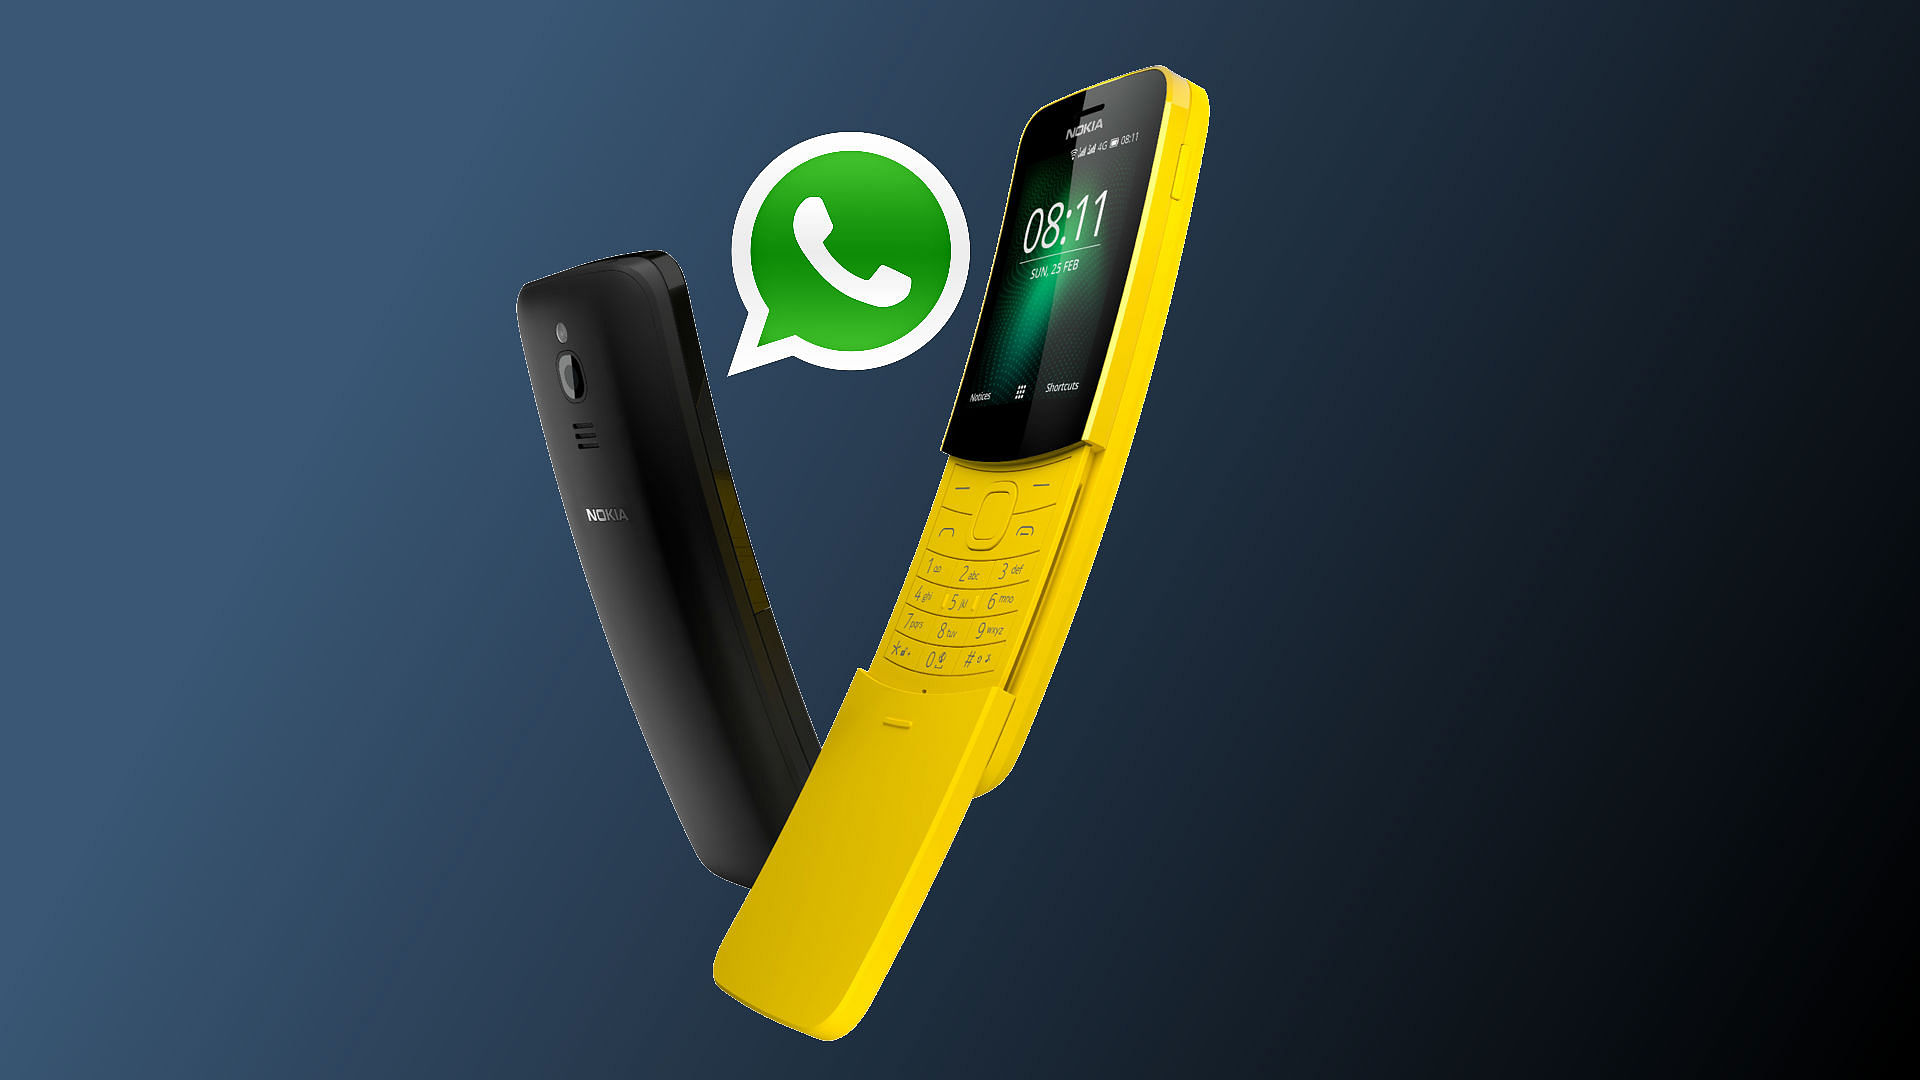 Nokia 8110 4G finally supports WhatsApp.&nbsp;